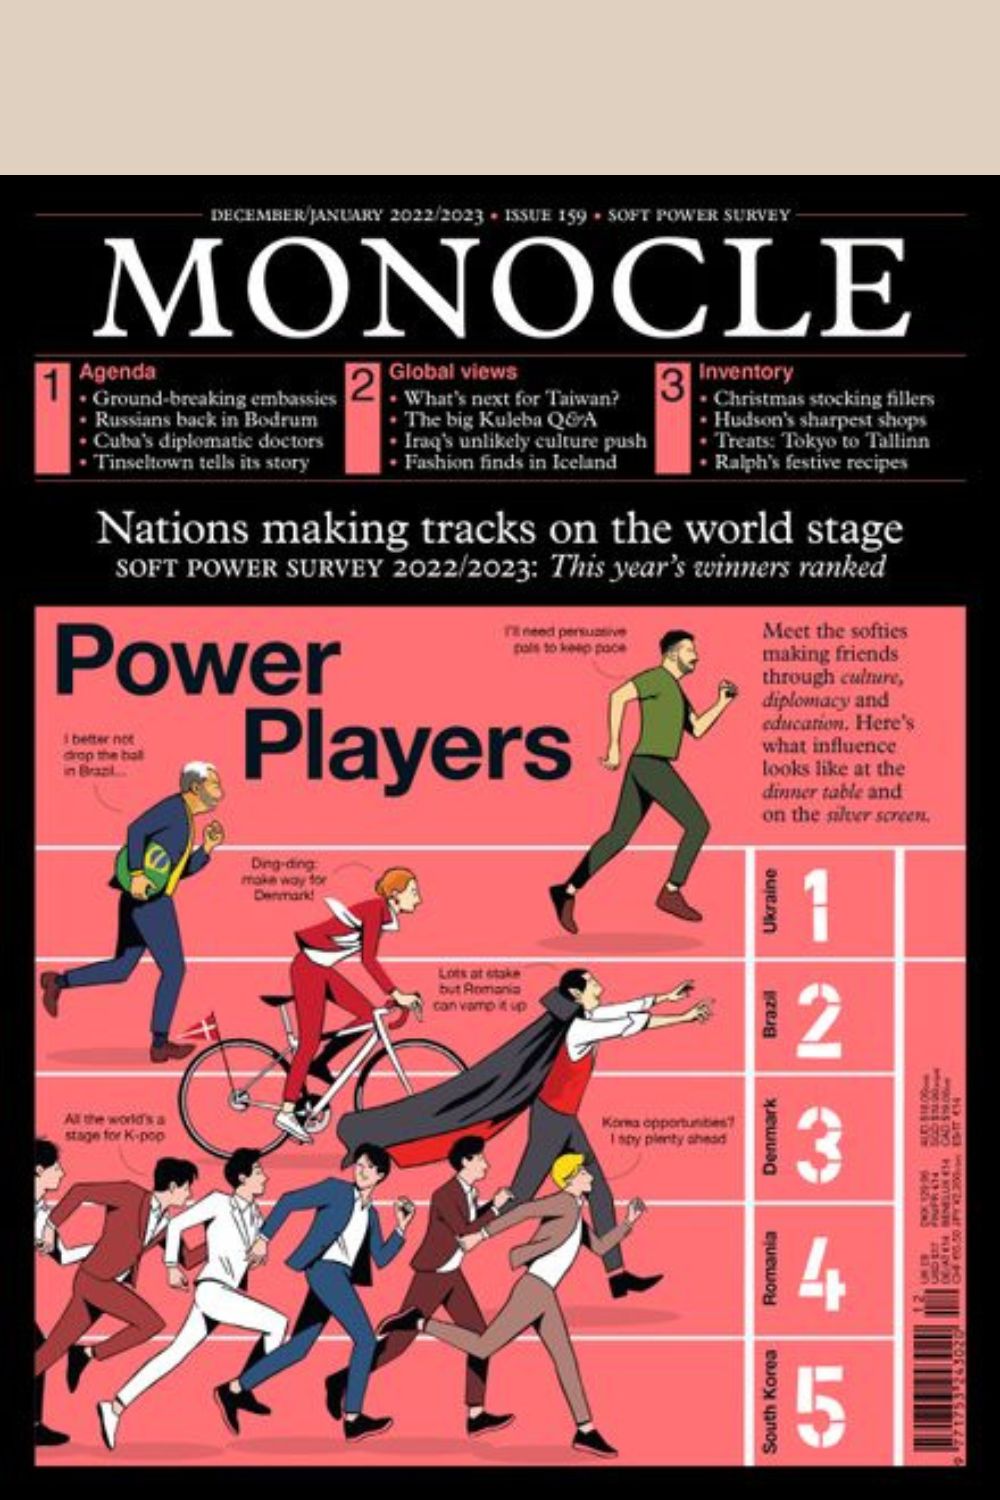 Monocle Magazine Issue 159